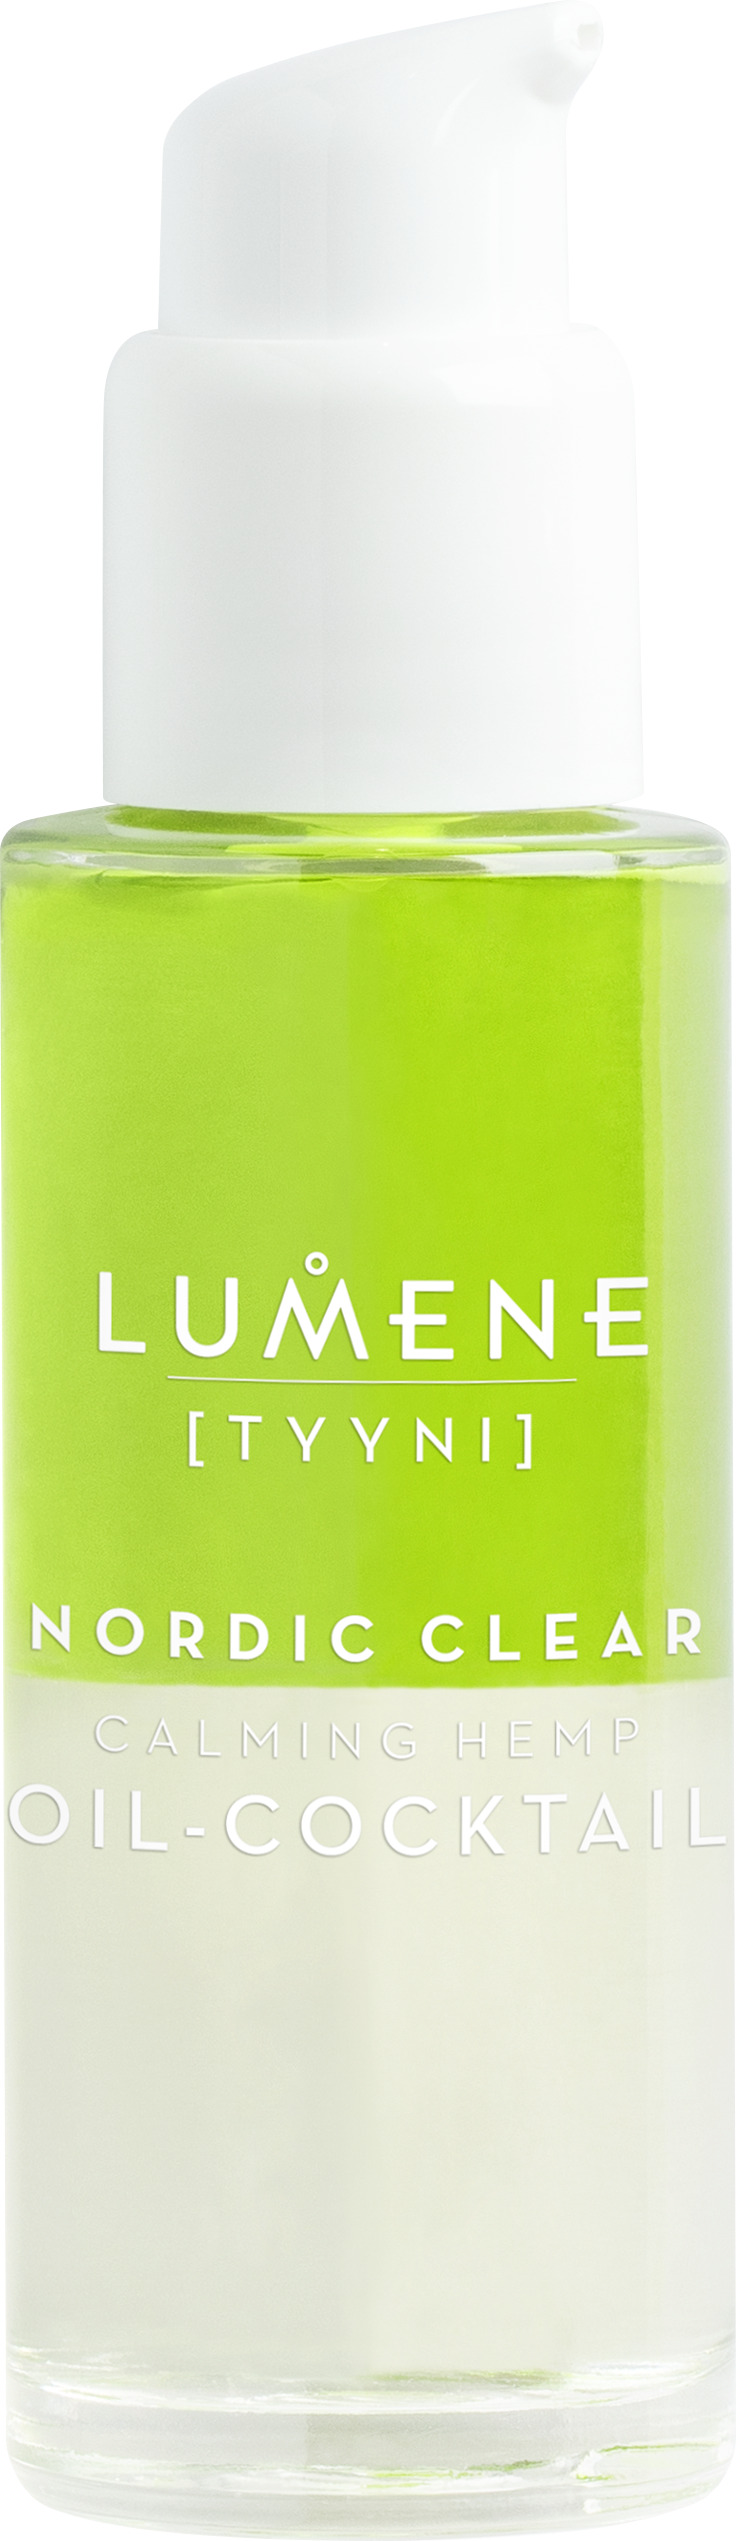 Lumene Nordic Clear Calming Hemp Oil-Cocktail 30 ml